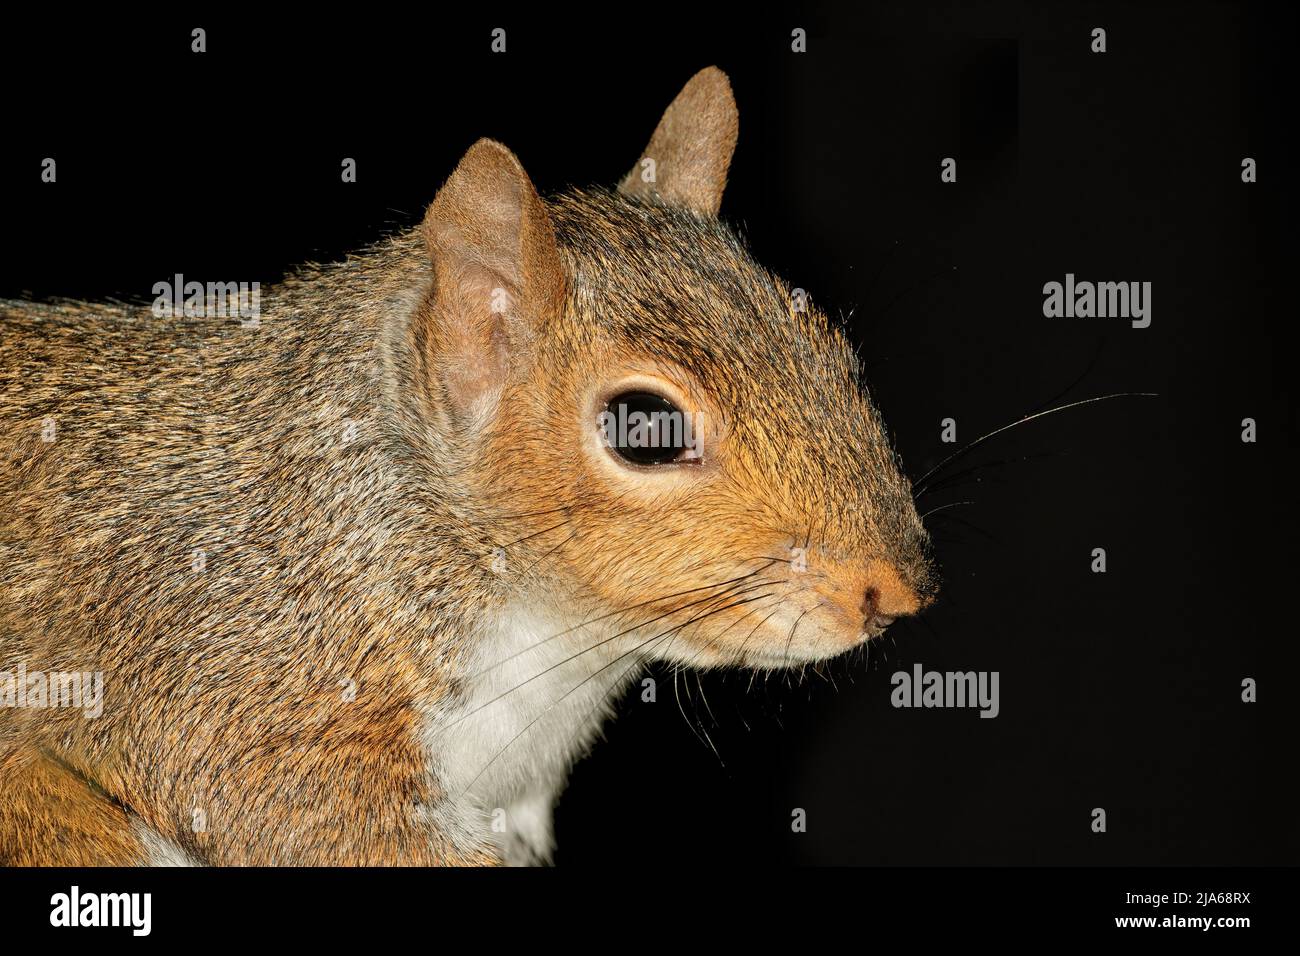 Portrait of a grey squirrel or eastern gray squirrel (Sciurus carolinensis) on black Stock Photo